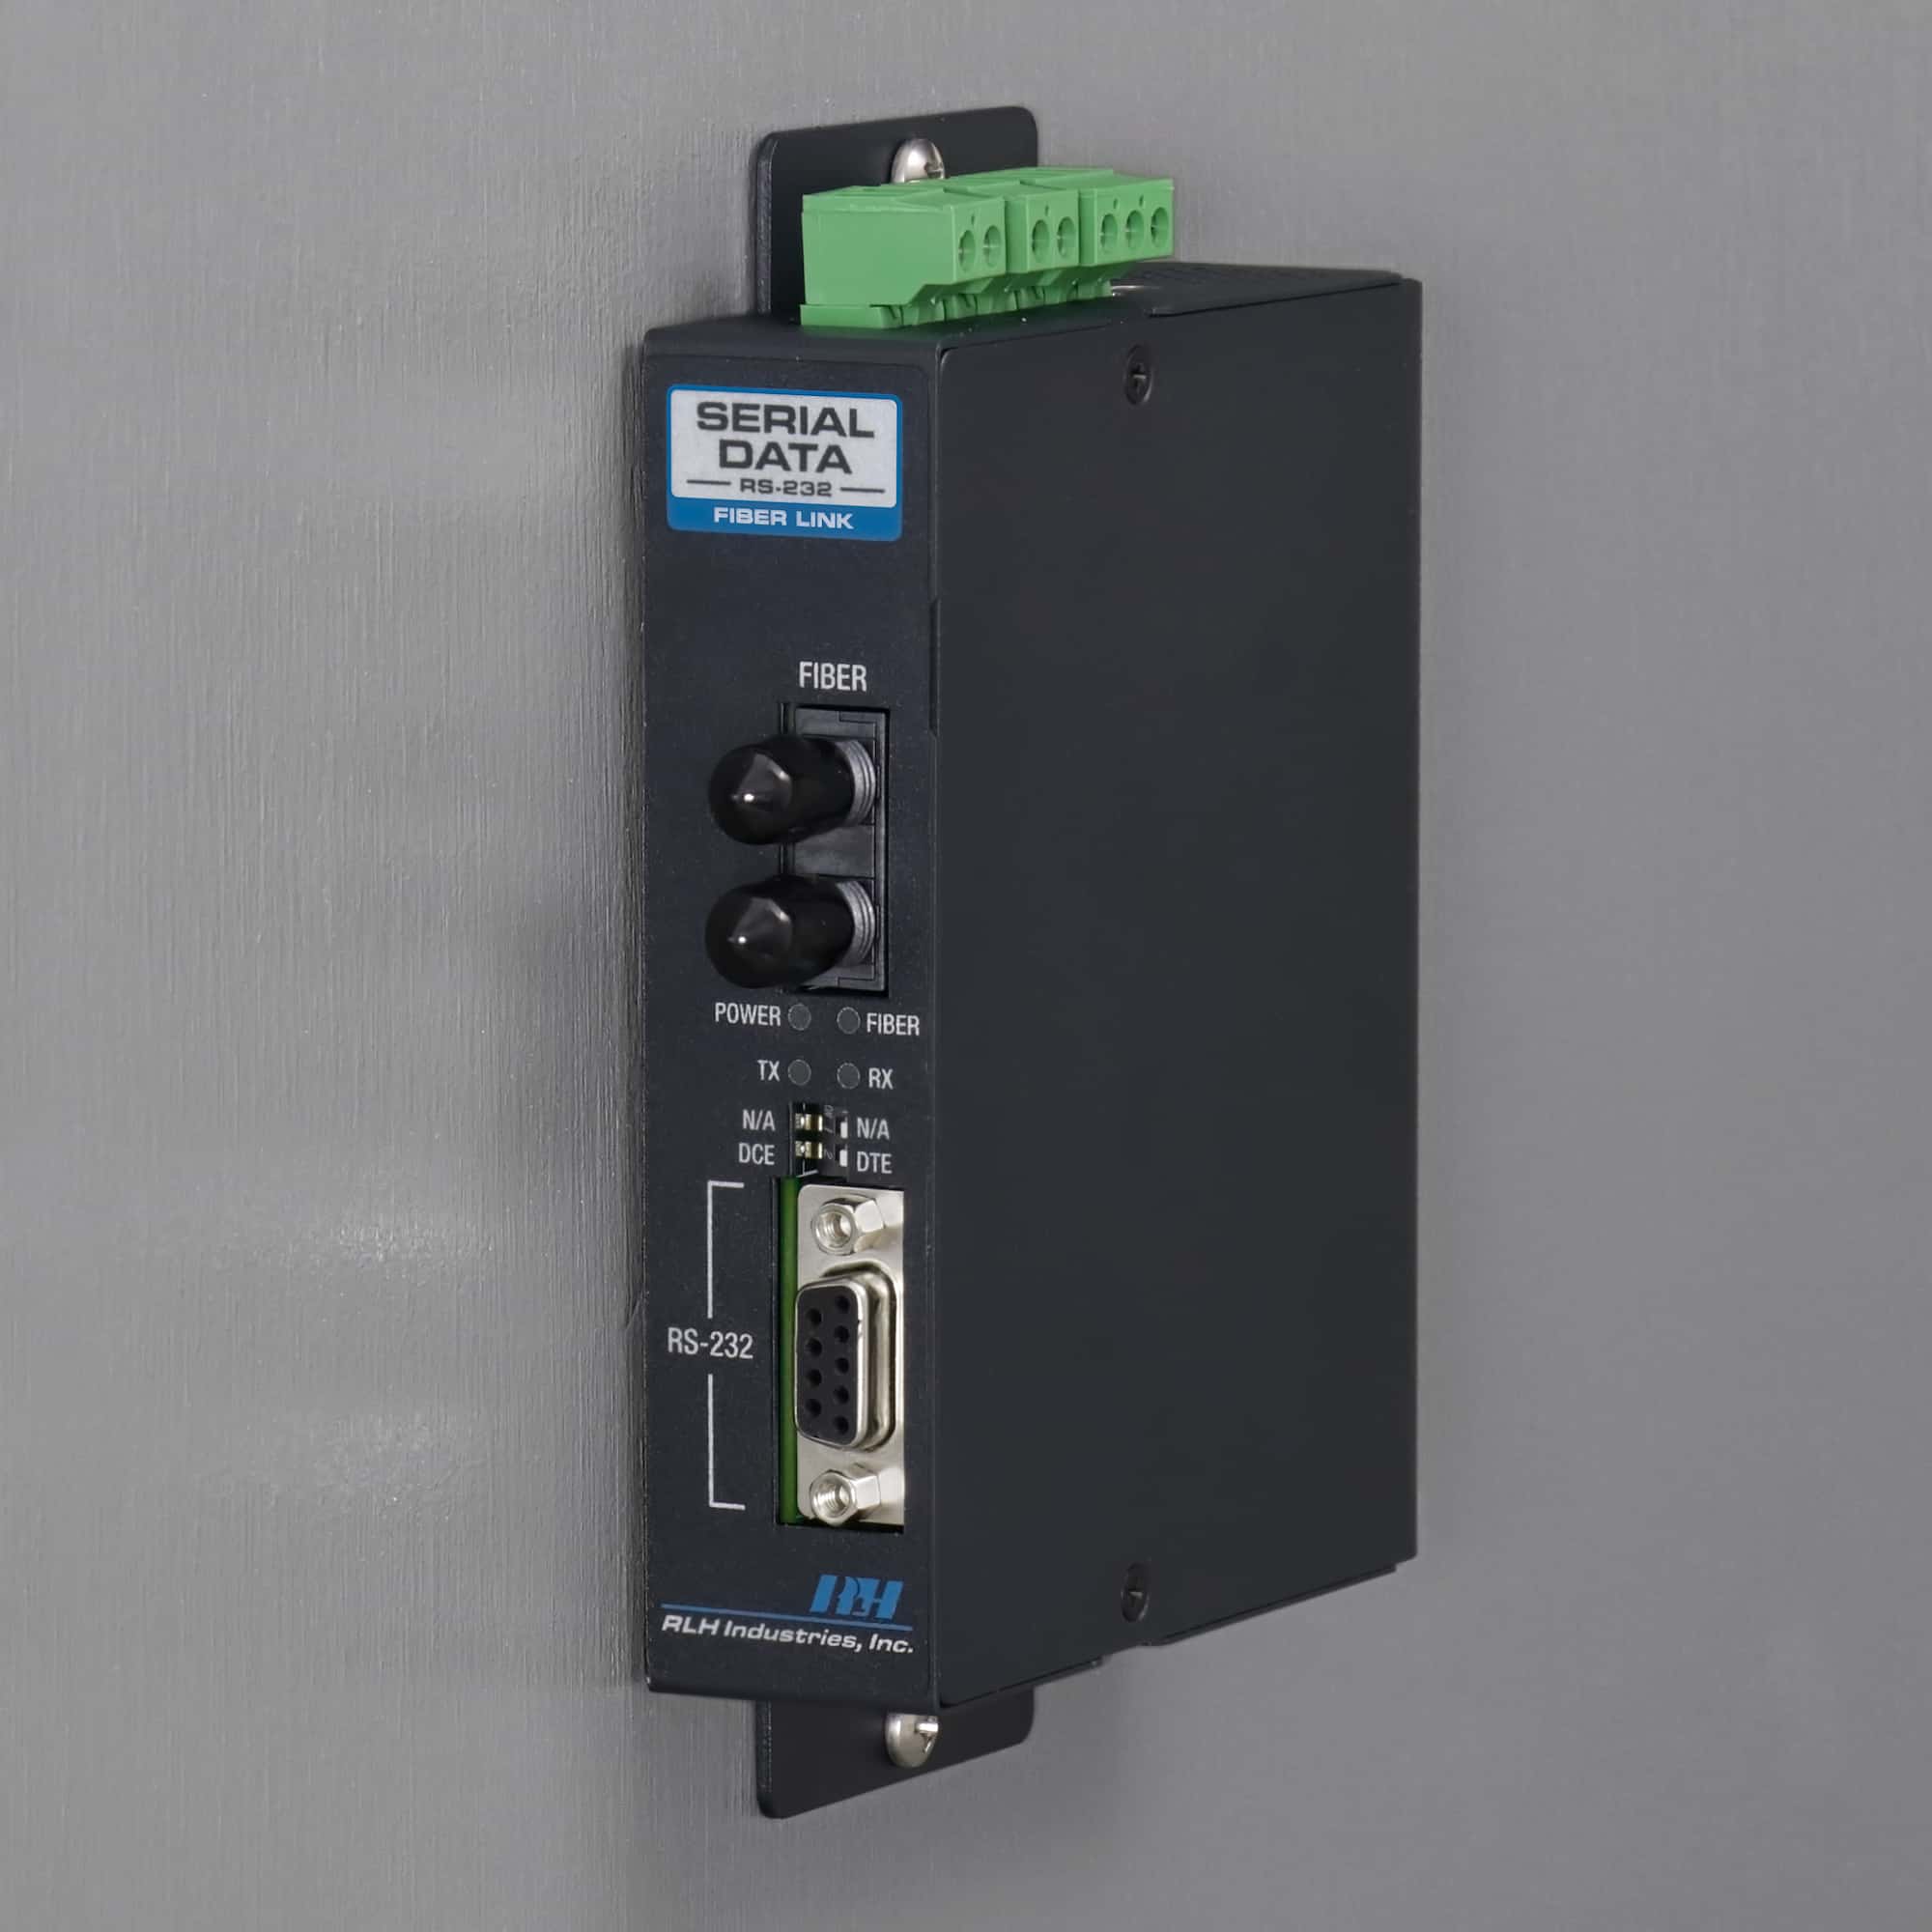 Industrial RS-232 Serial Data Fiber Converter - RLH Industries, Inc.